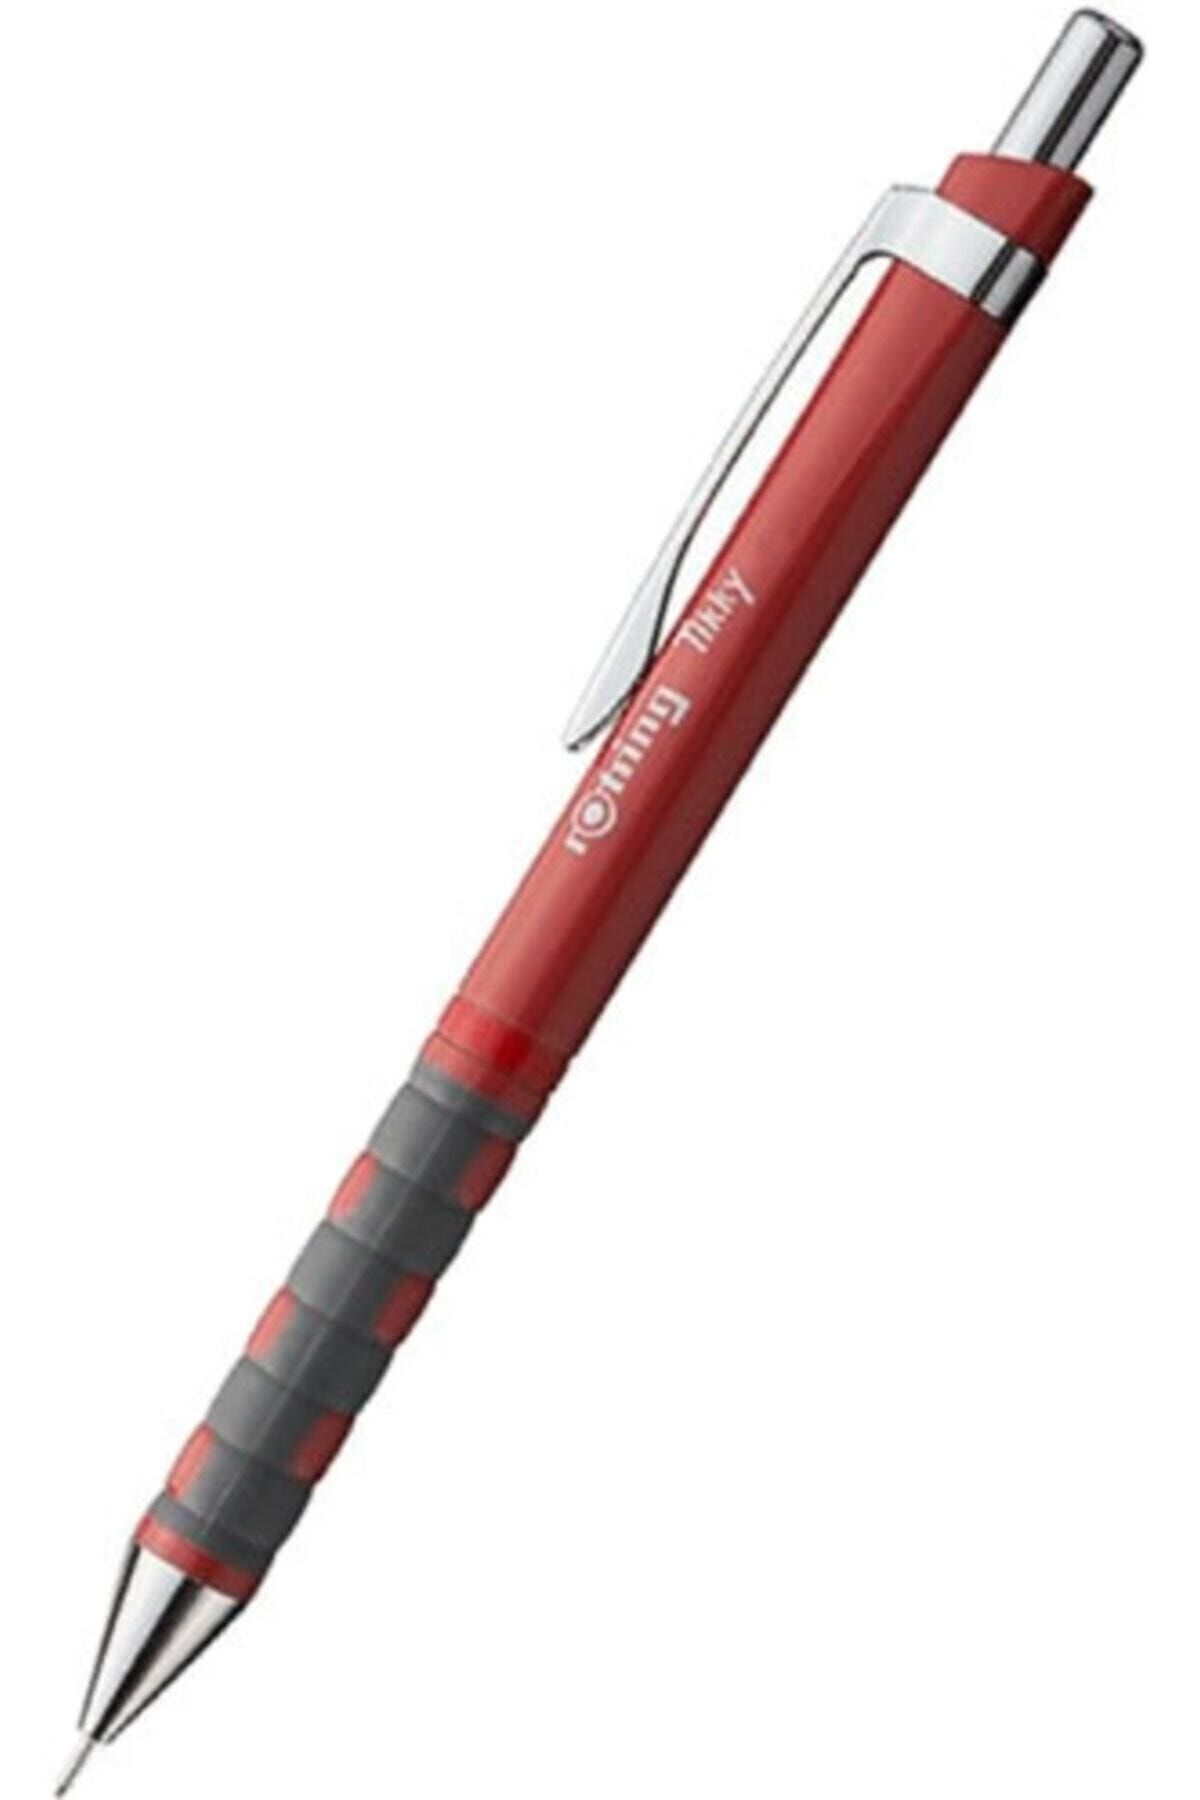 Rotring Tıkky Mekanik Kurşun Kalem 4c Kiremit Kırmızı 0.7 Mm